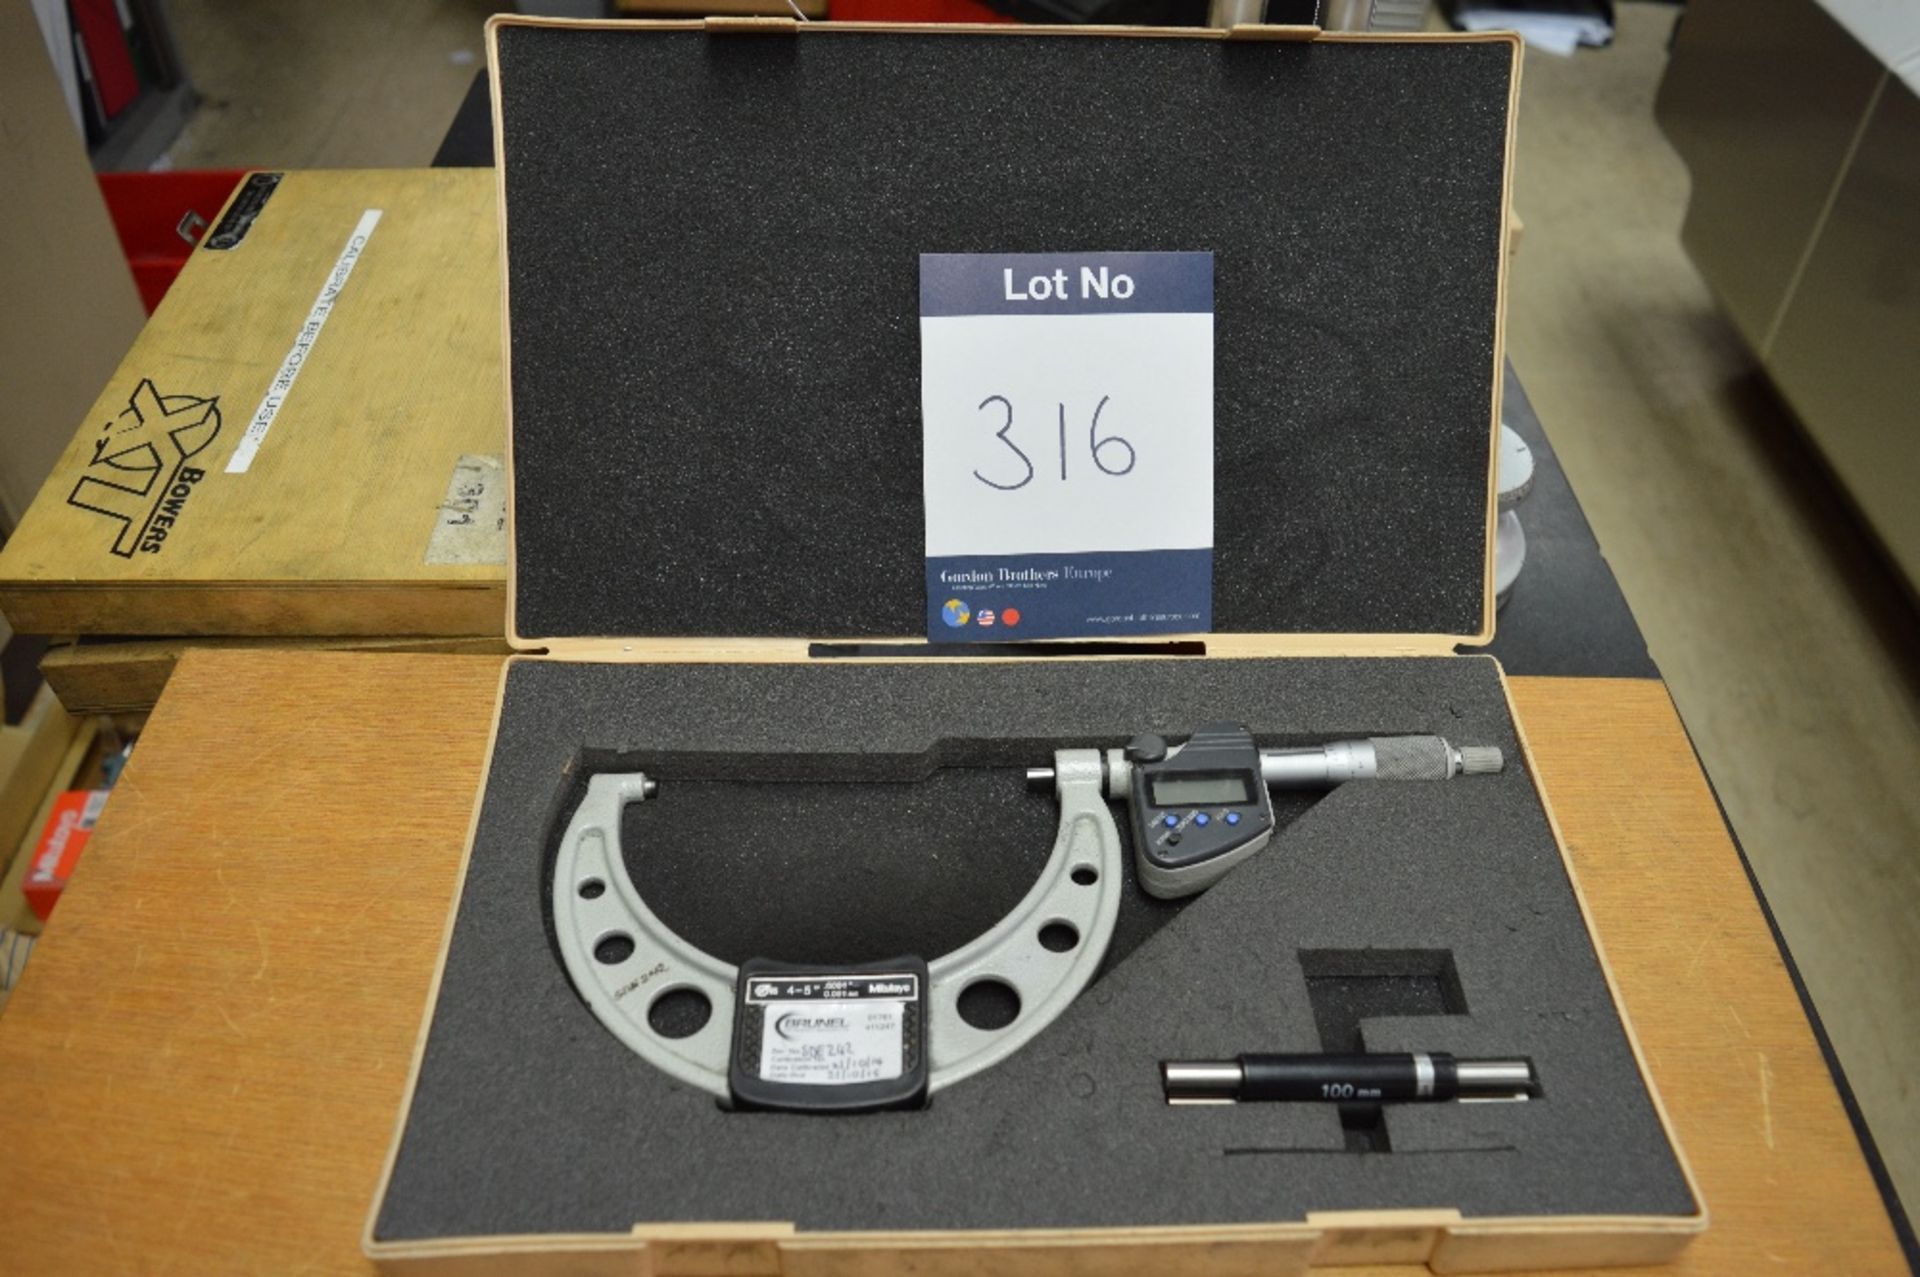 Mitutoyo 3-4" Digital Micrometer
Serial Number: SD